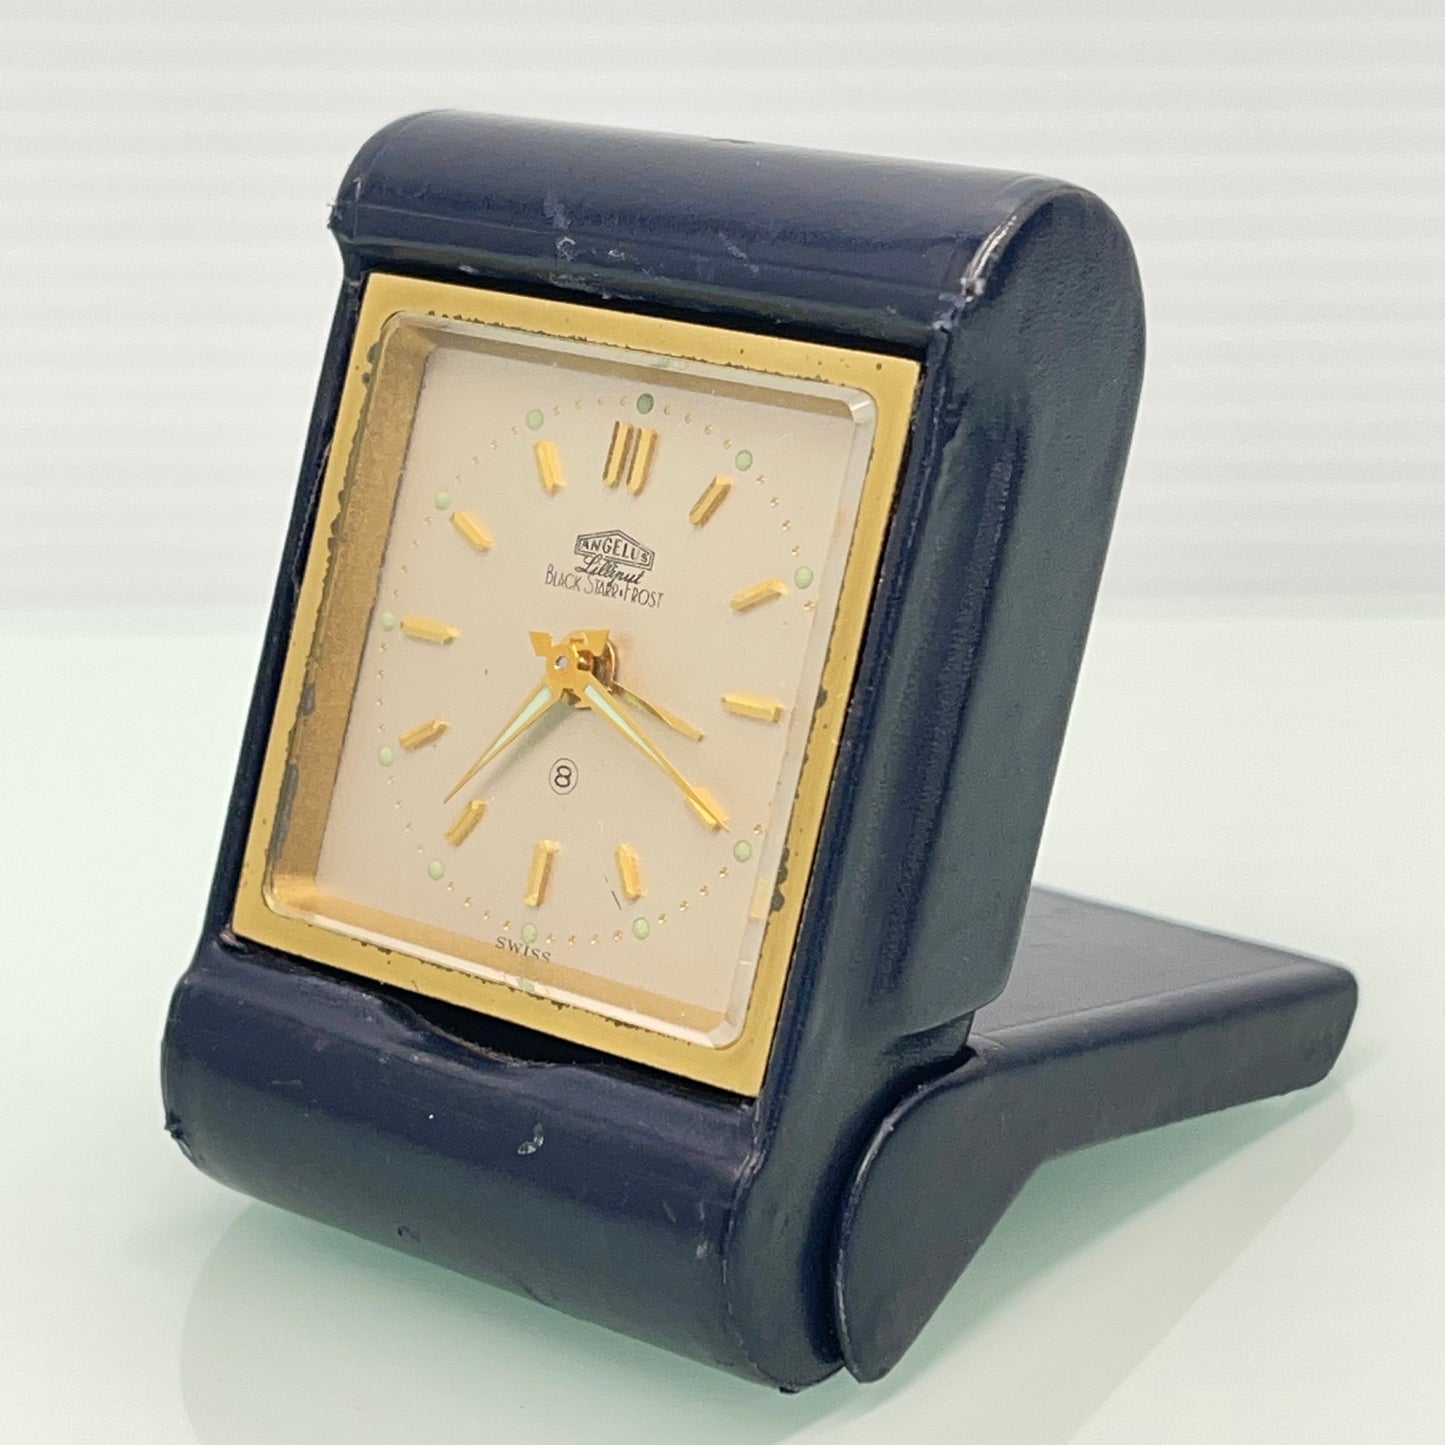 Angelus Lilliput Pocket Travel Alarm Clock branded by Black, Starr & Frost c.1930